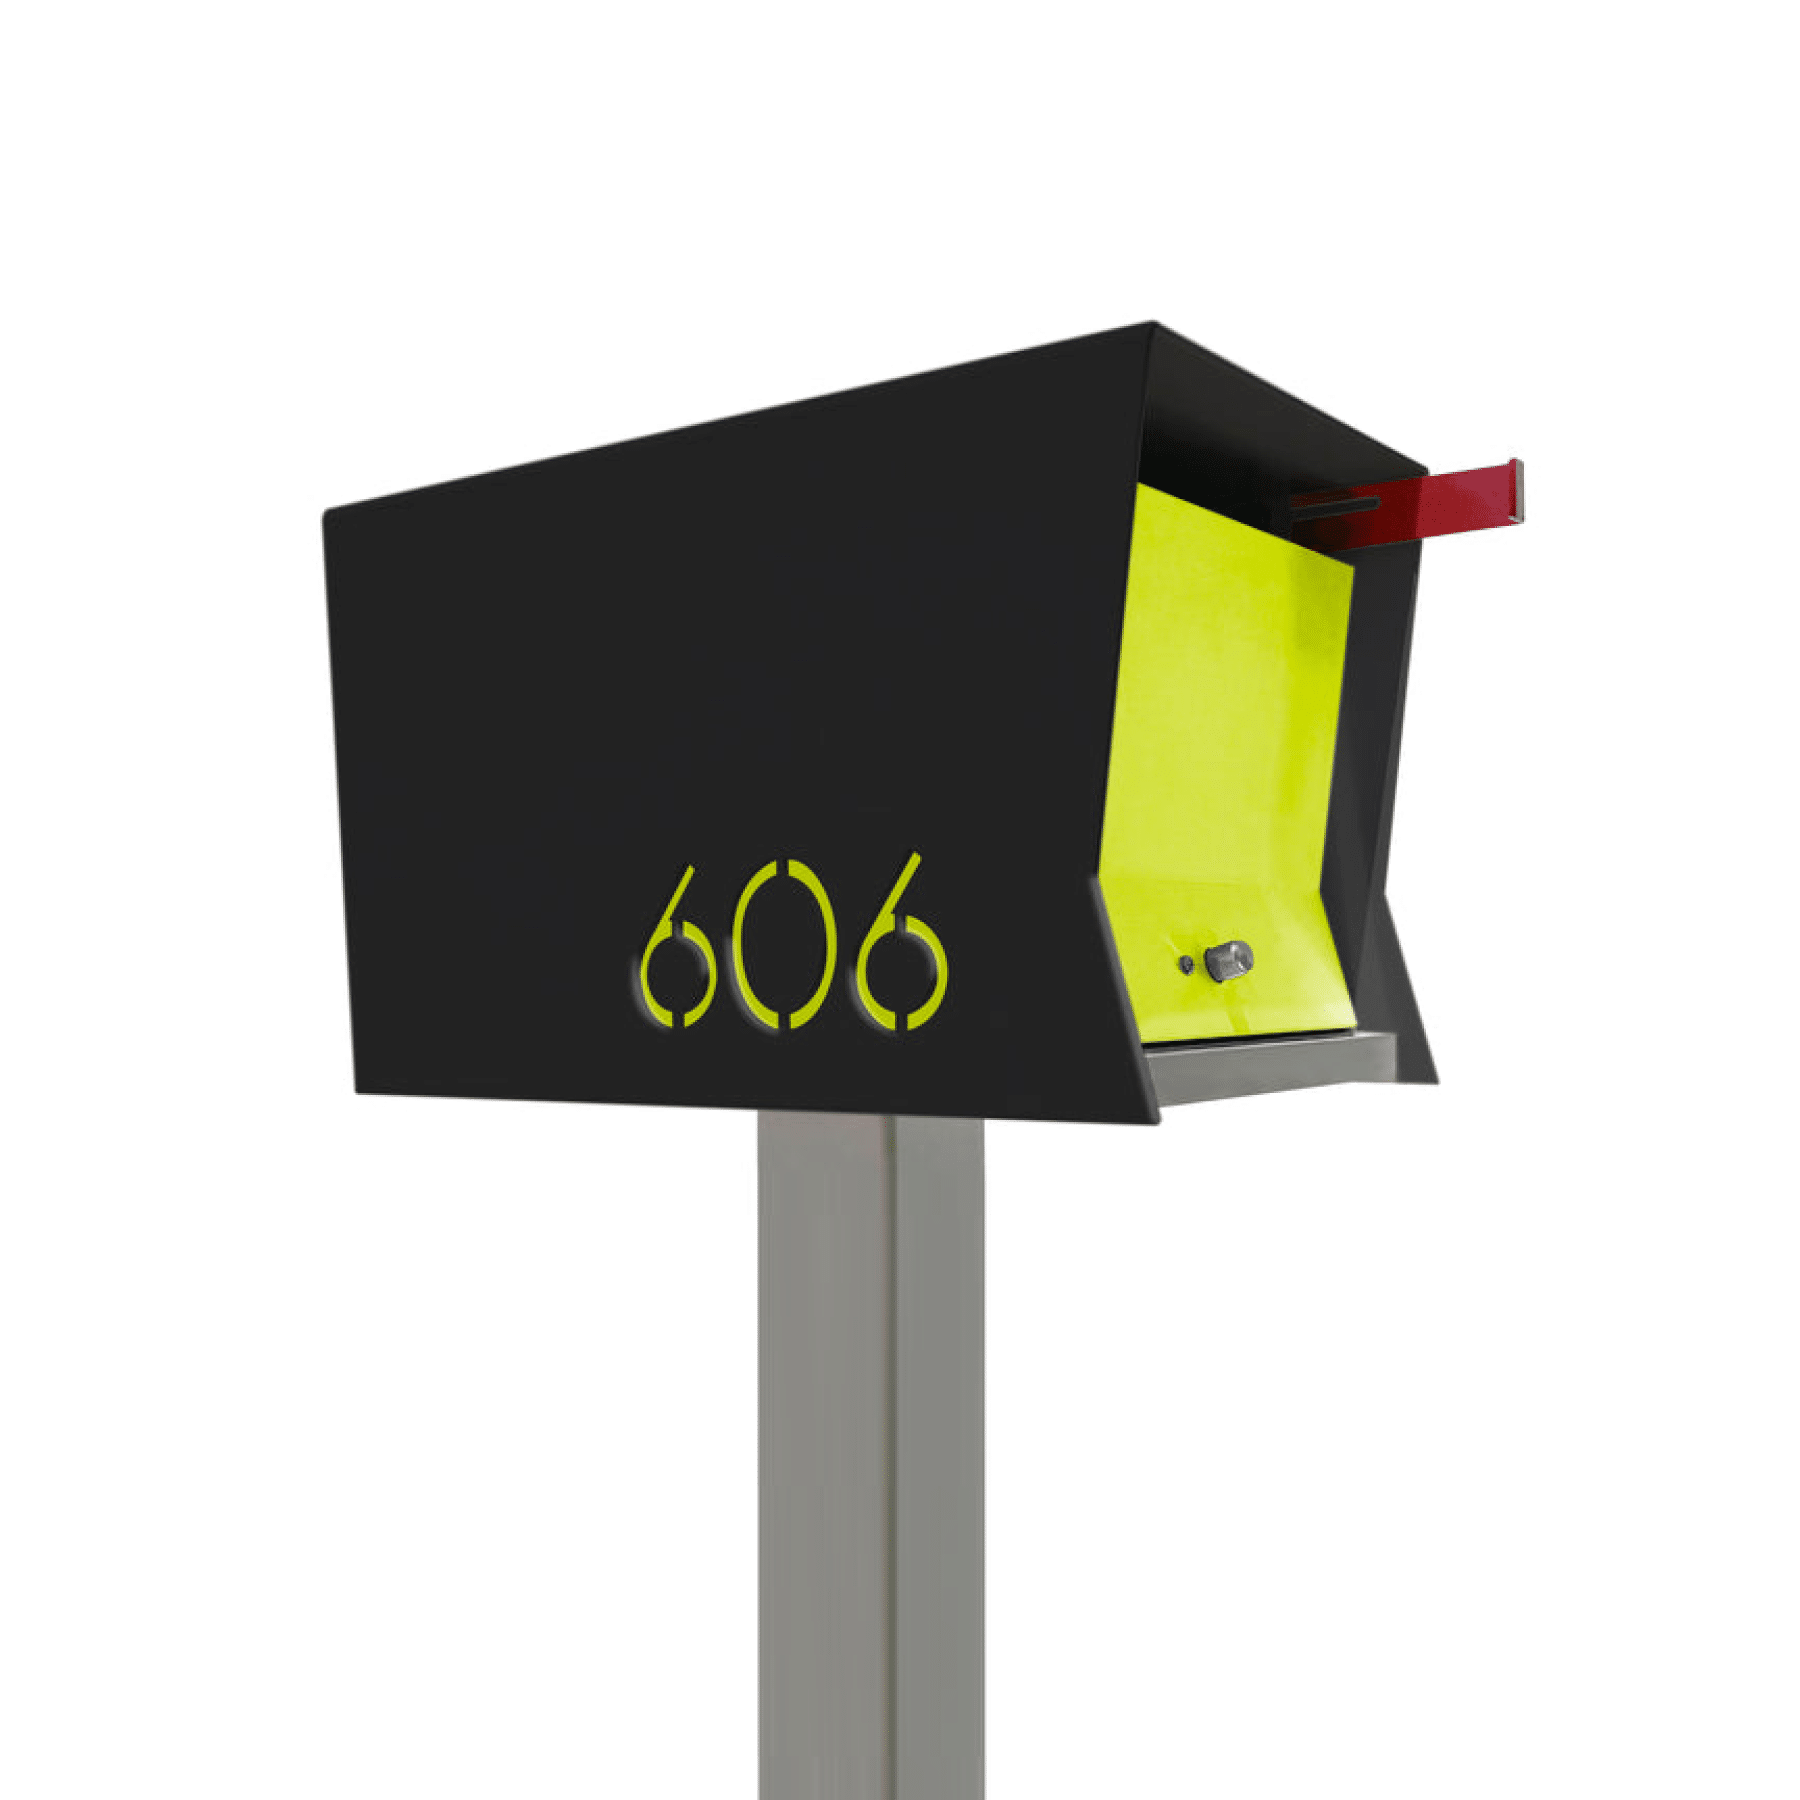 The Original Retrobox in Jet Black – Modern Mailbox